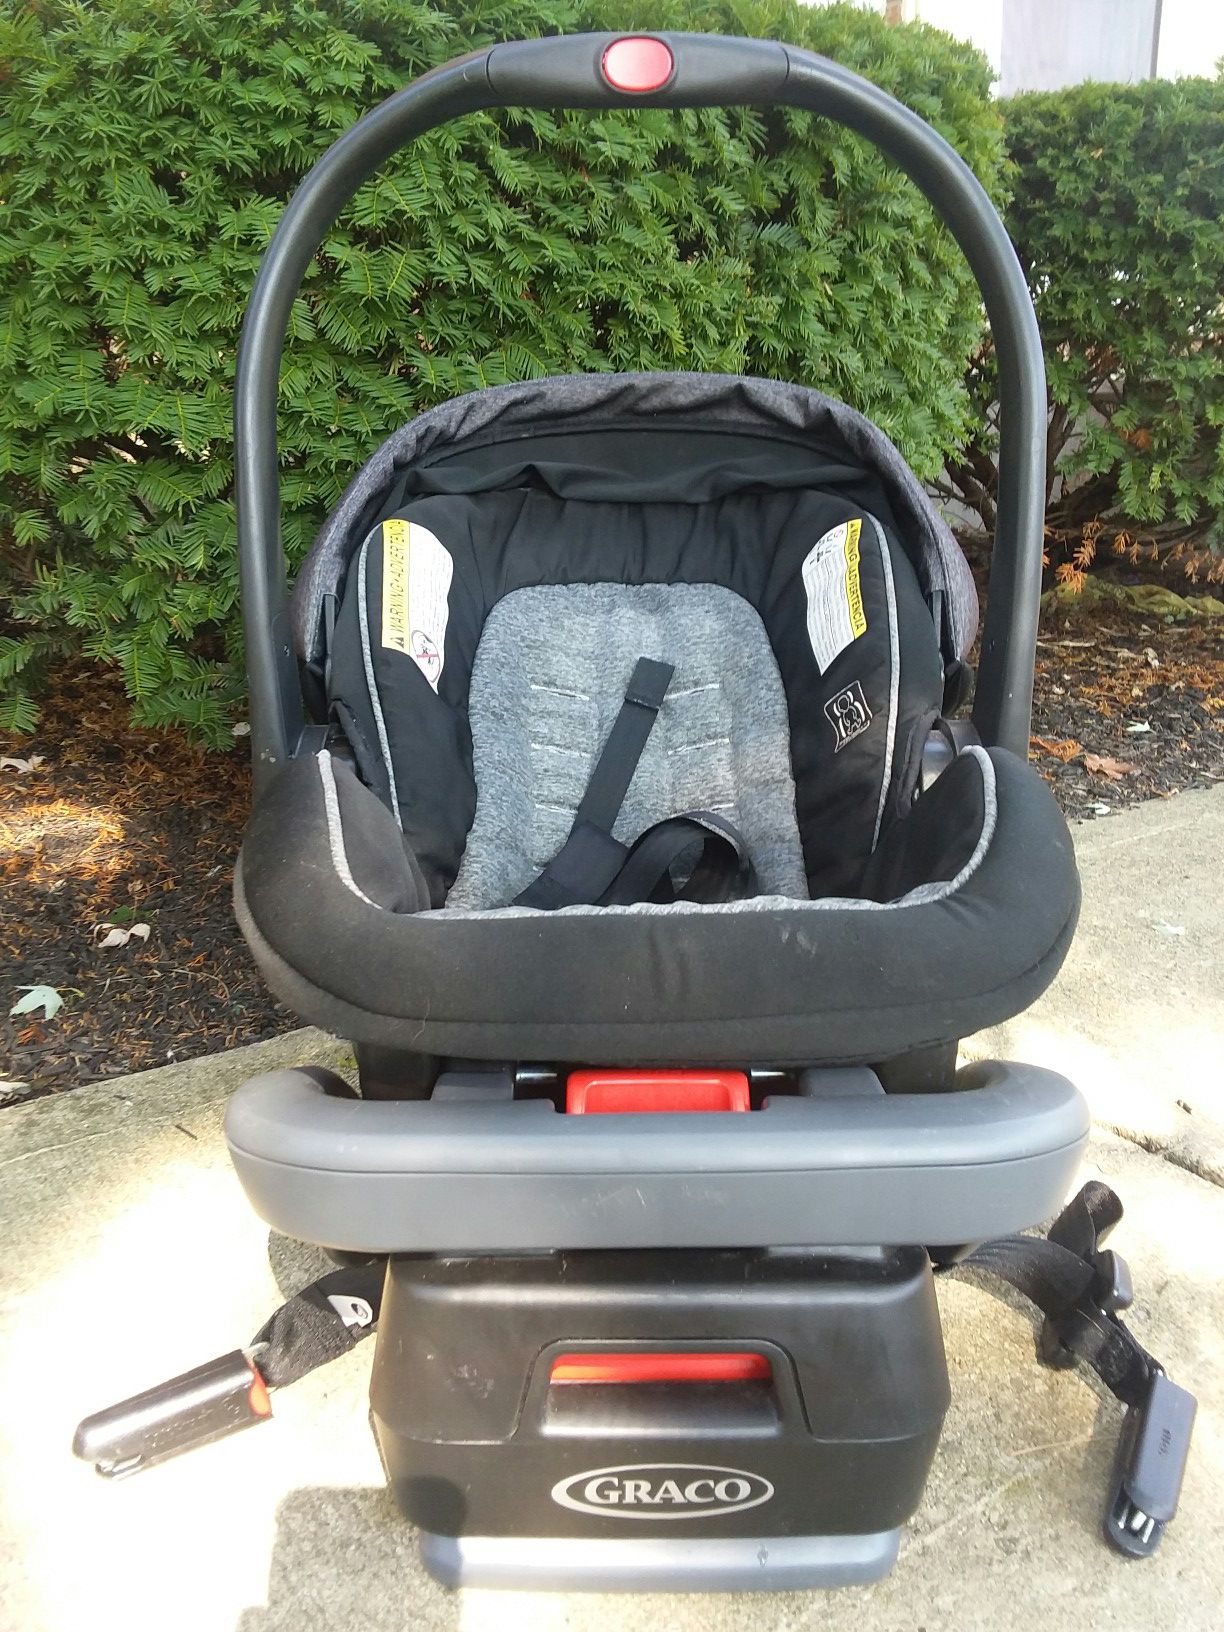 Graco SnugRide SnugLock 35 infant car seat